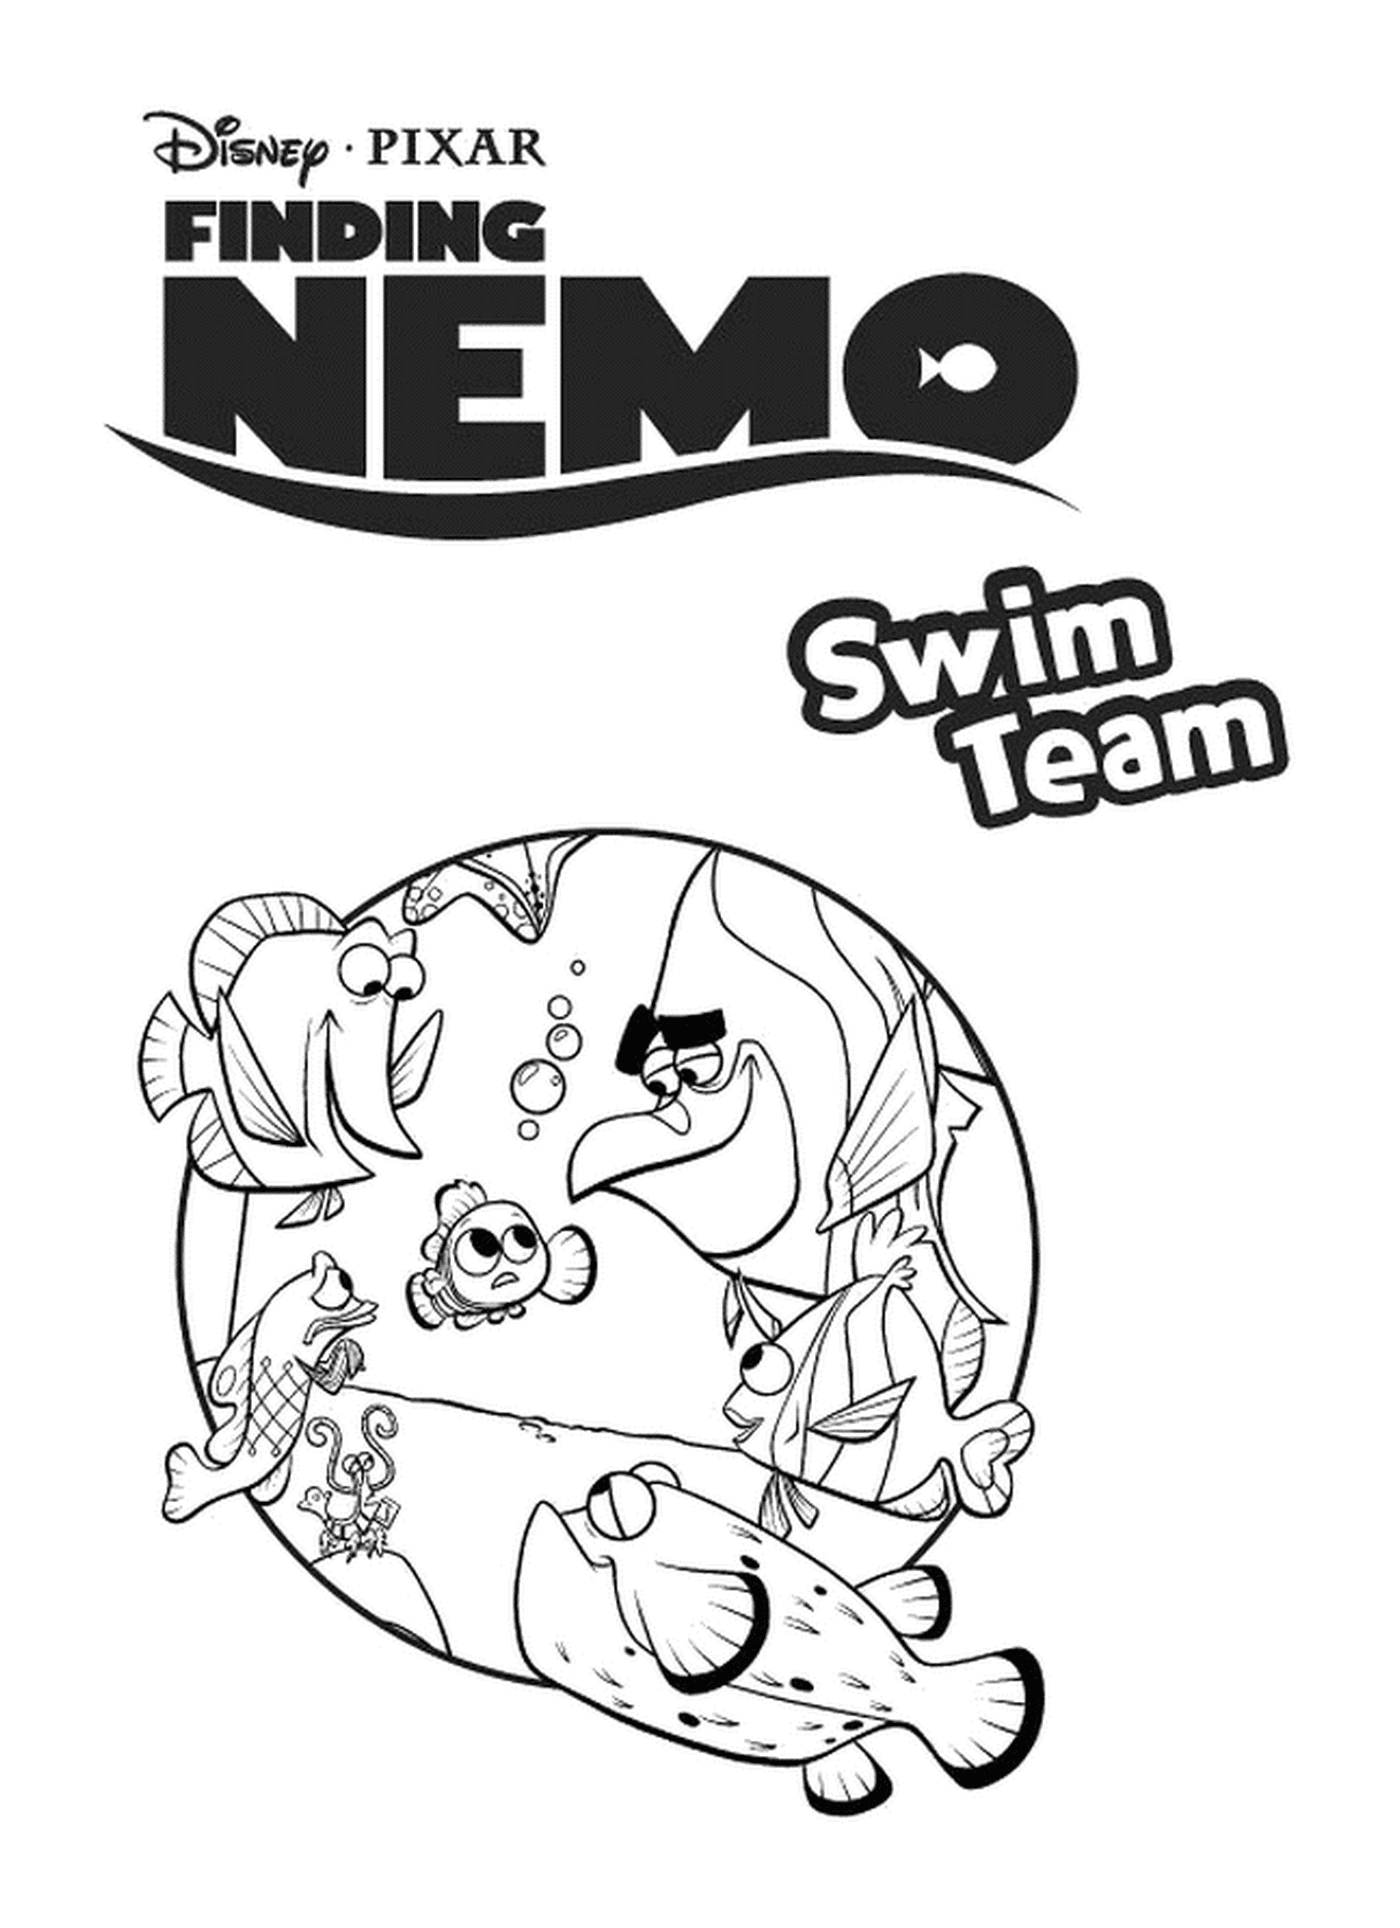  The Swimming Team of Find Nemo 